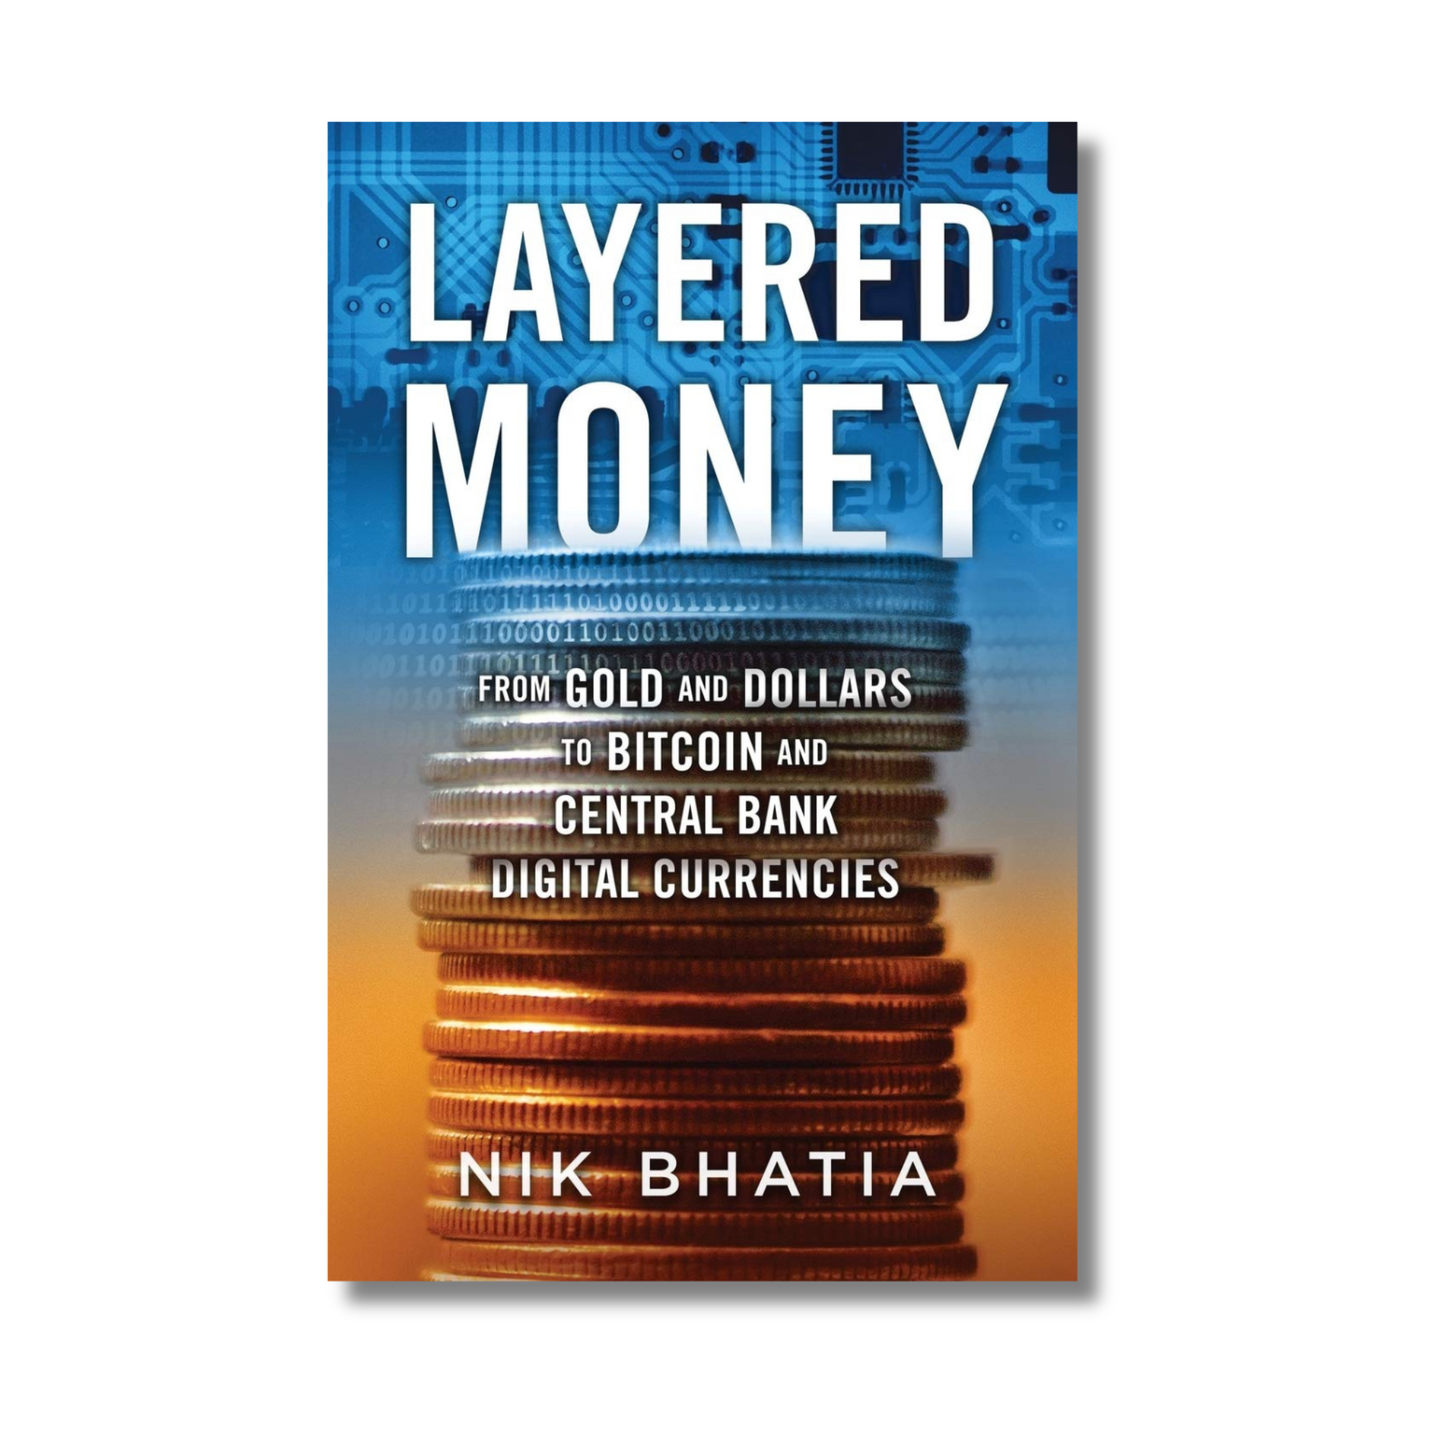 Layered Money By Nik Bhatia (Paperback)